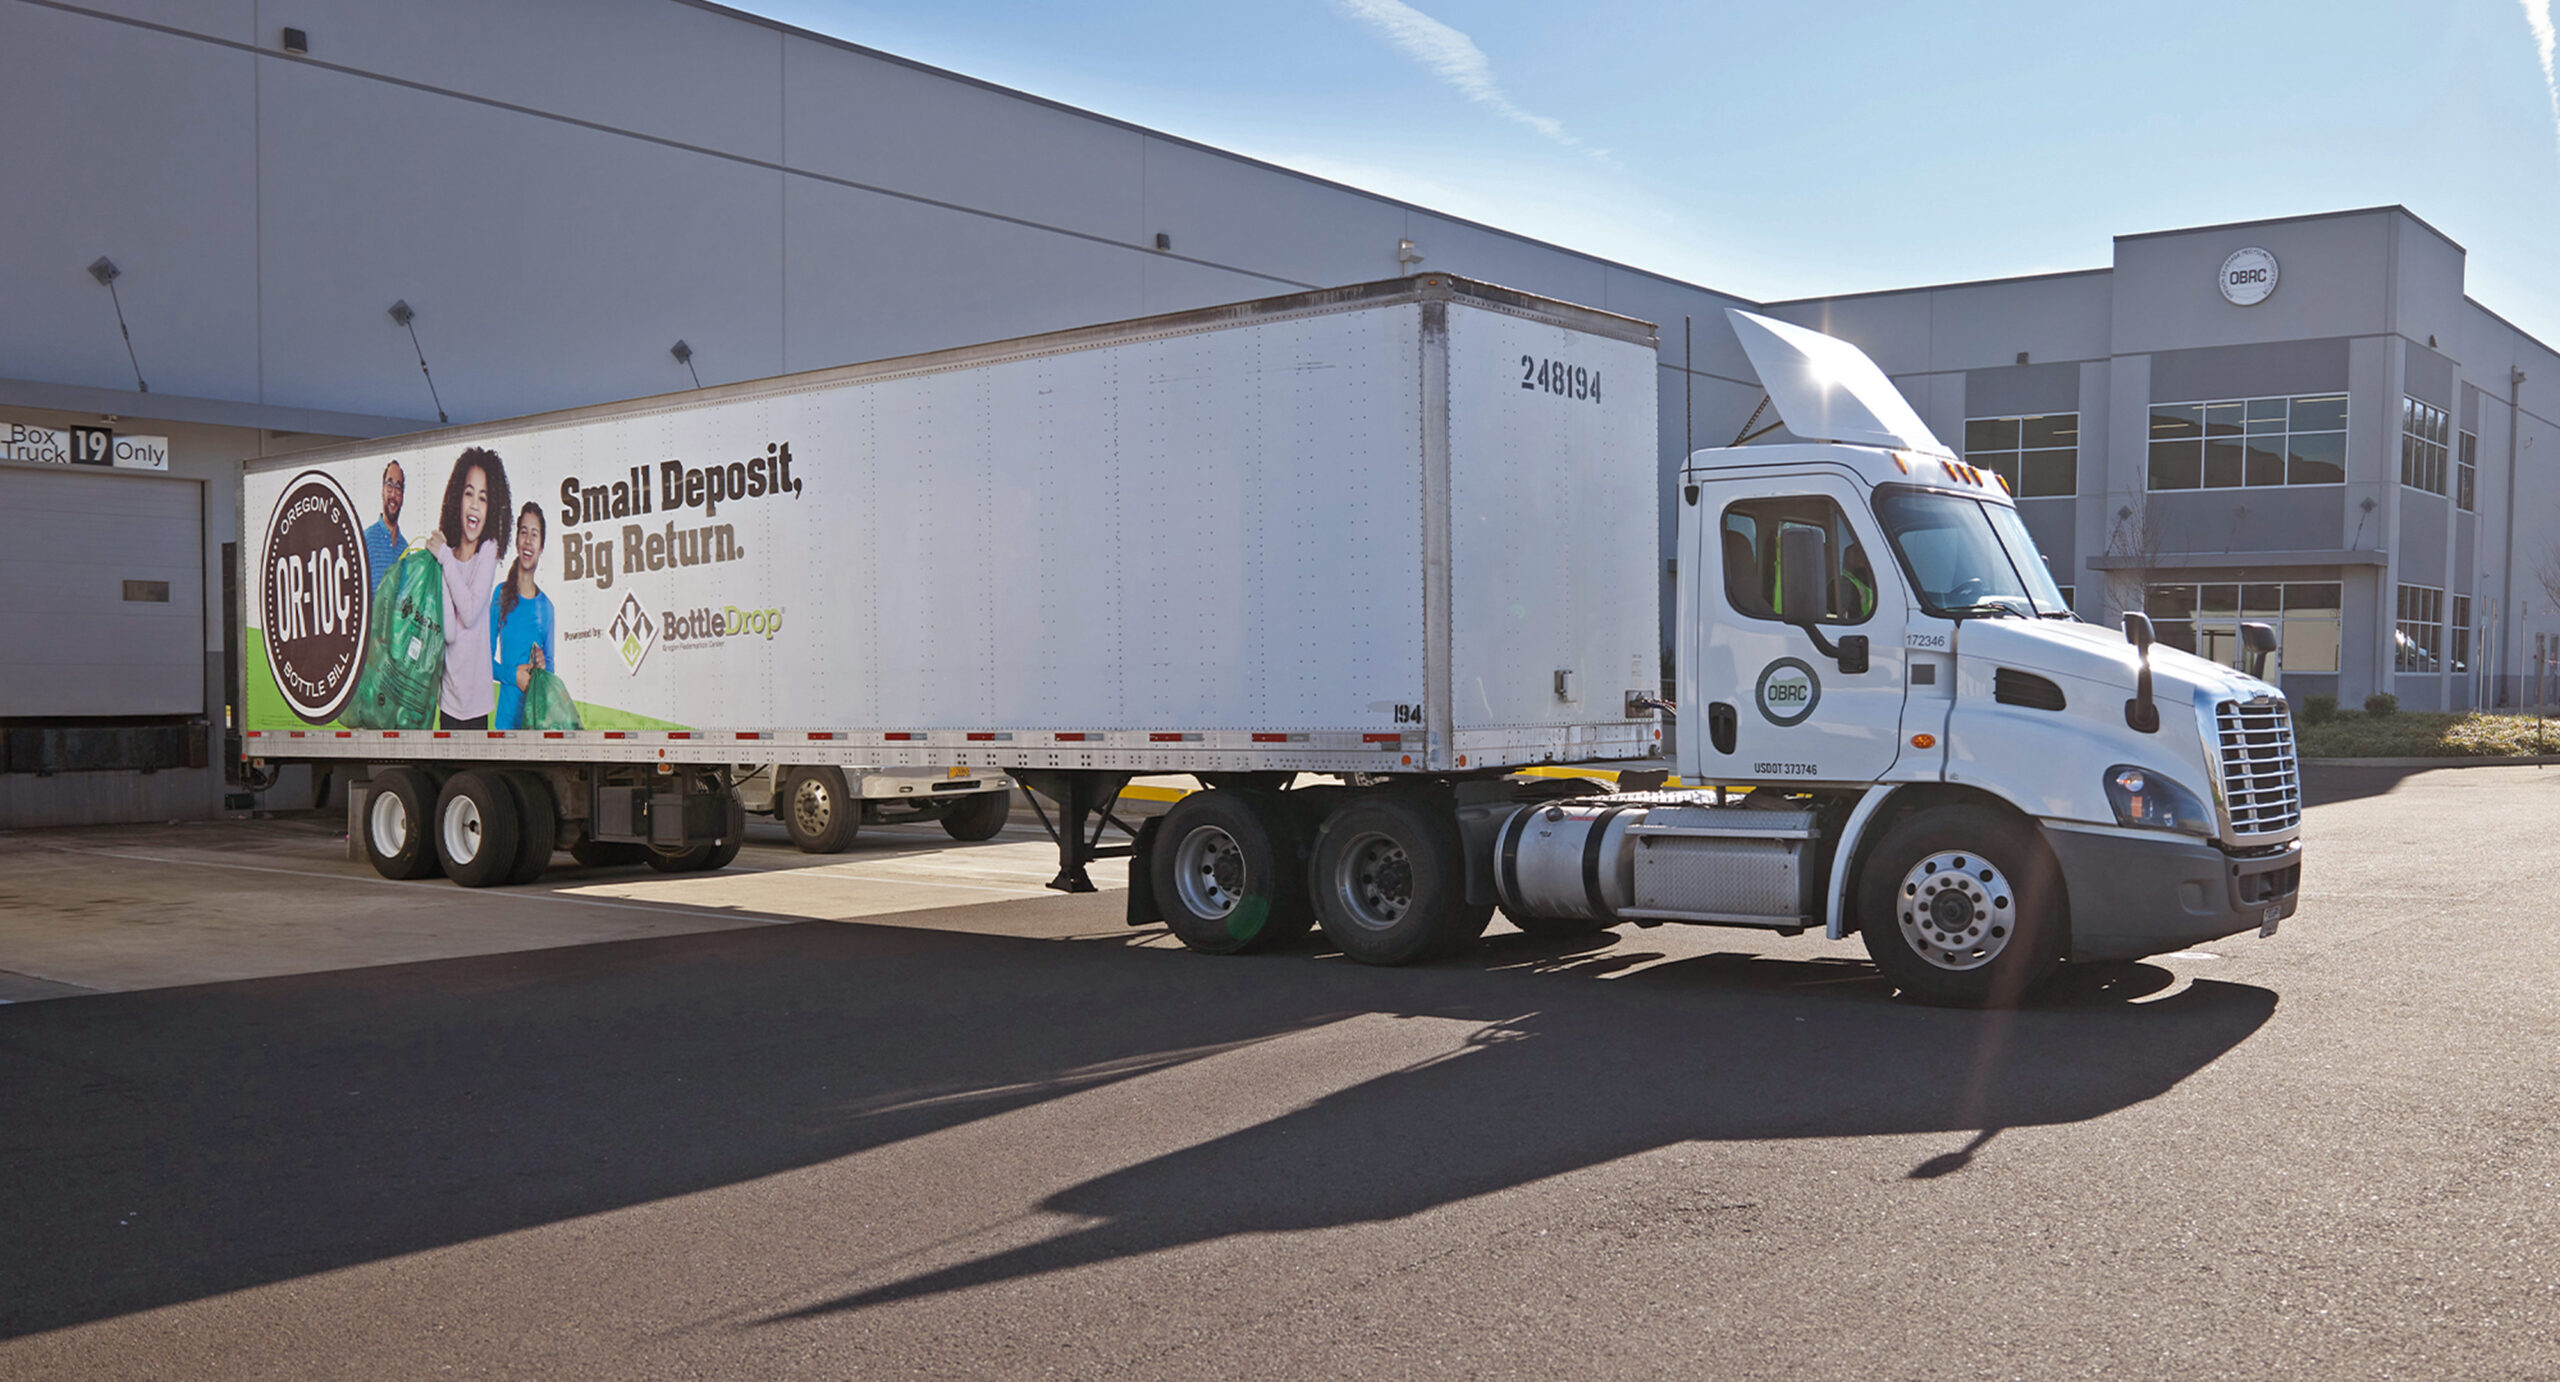 A large BottleDrop truck parked at the OBRC headquarters in Clackamas, Oregon.